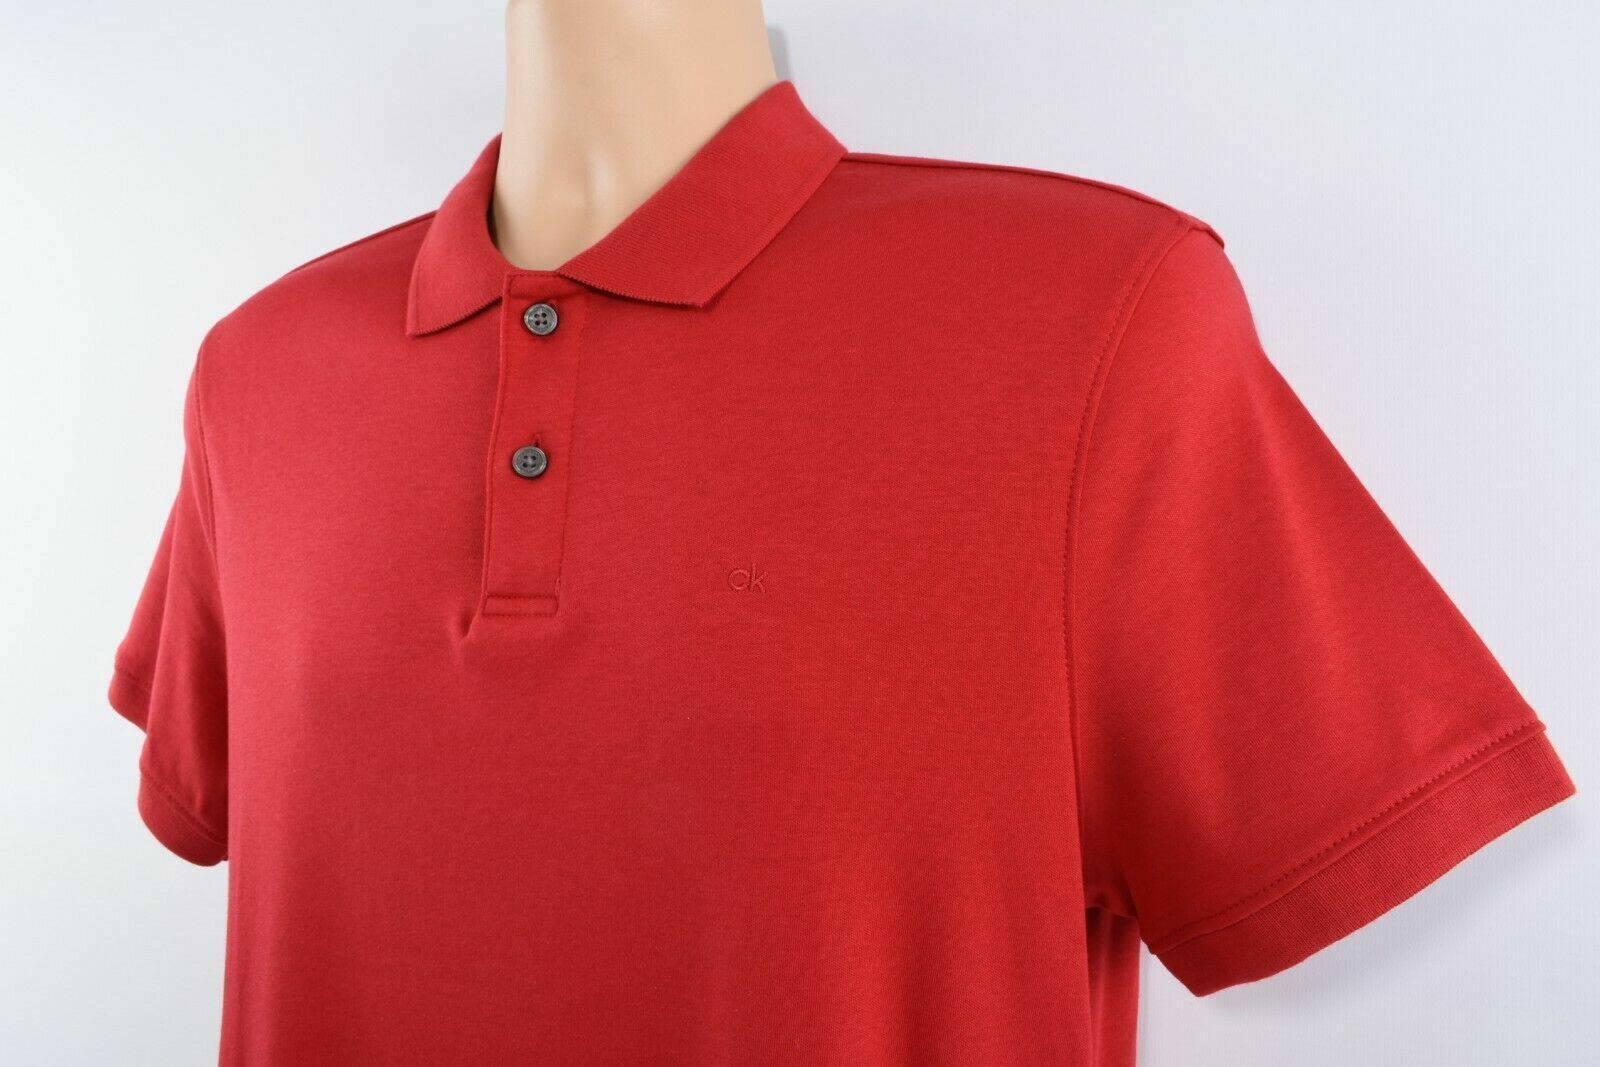 CALVIN KLEIN Men's Liquid Touch Cotton Polo Shirt, Chilli Pepper Red, size S